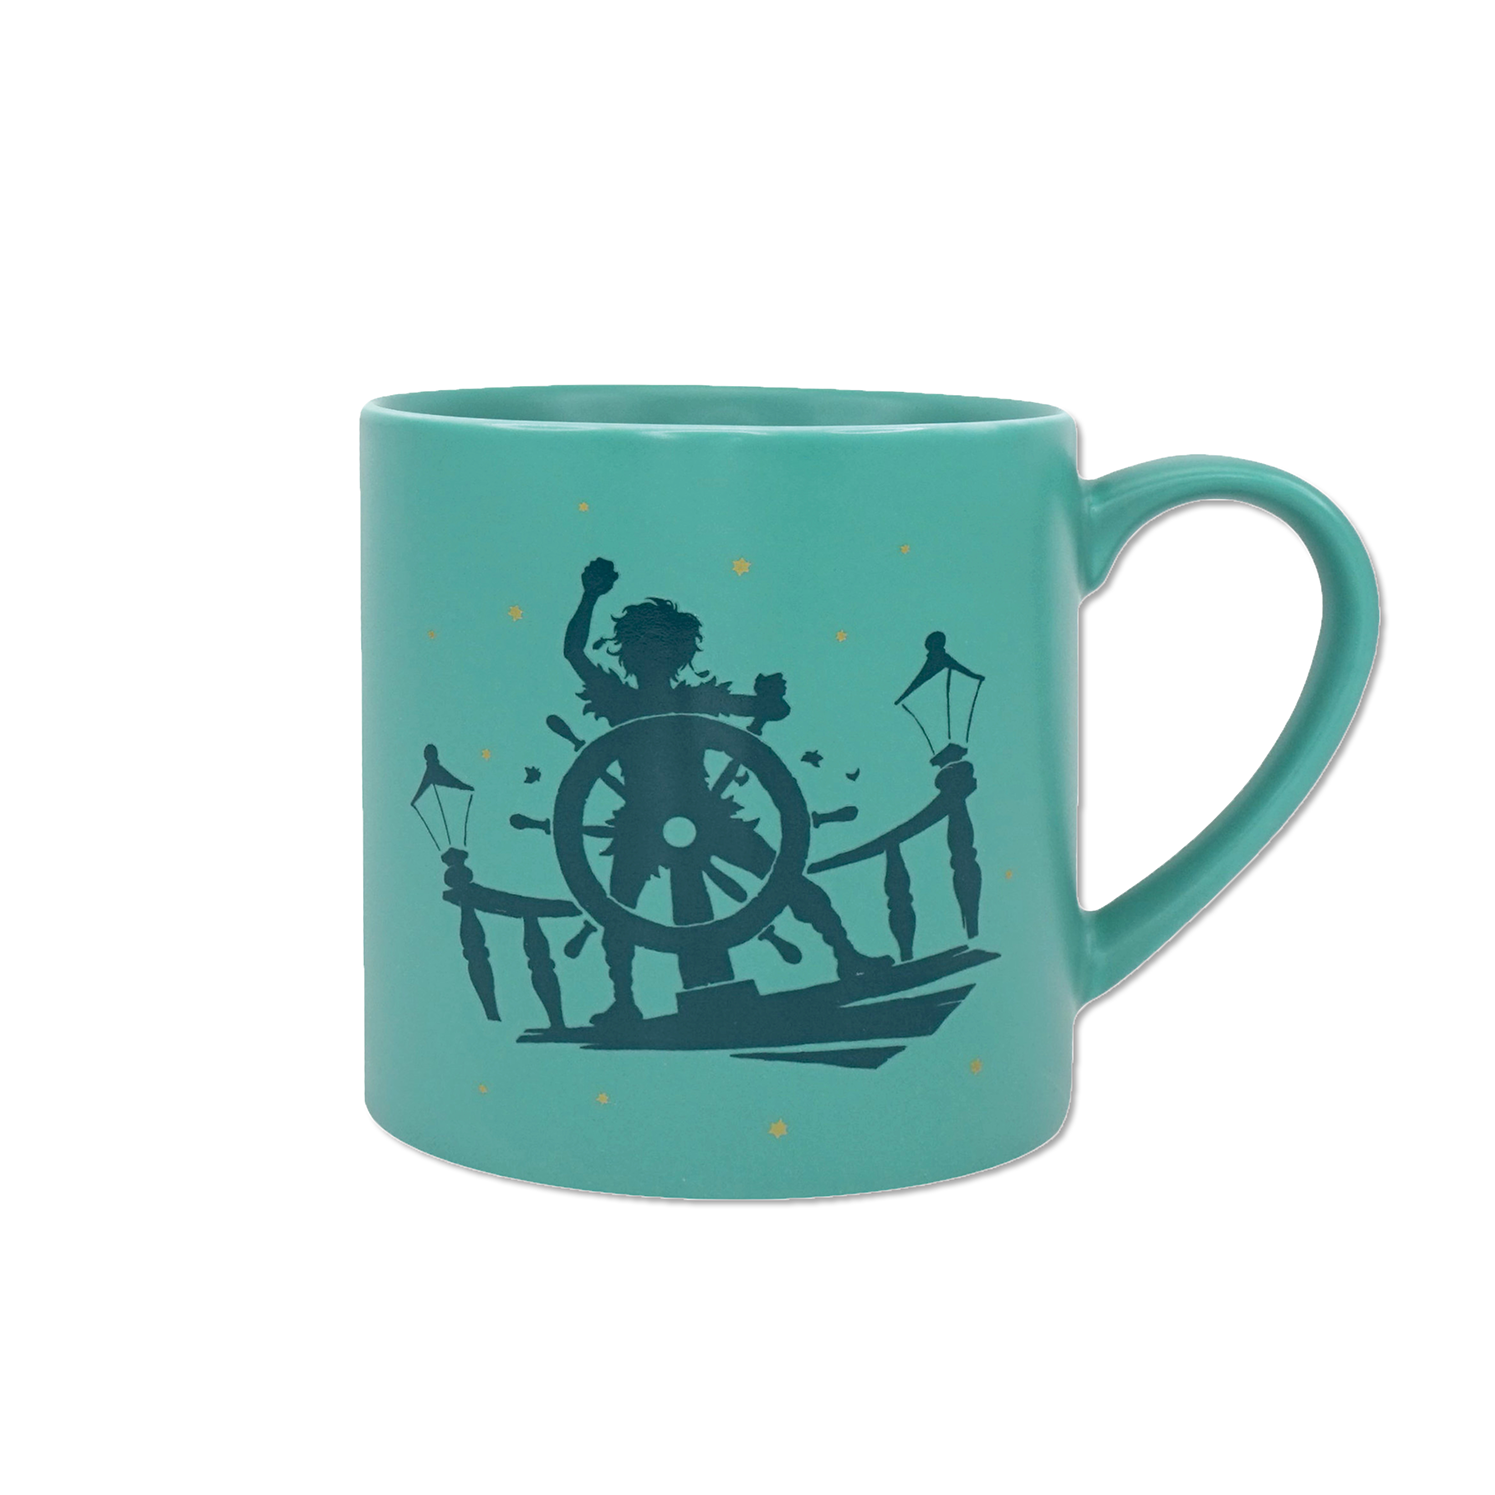 Peter Pan and wendy inspired mug